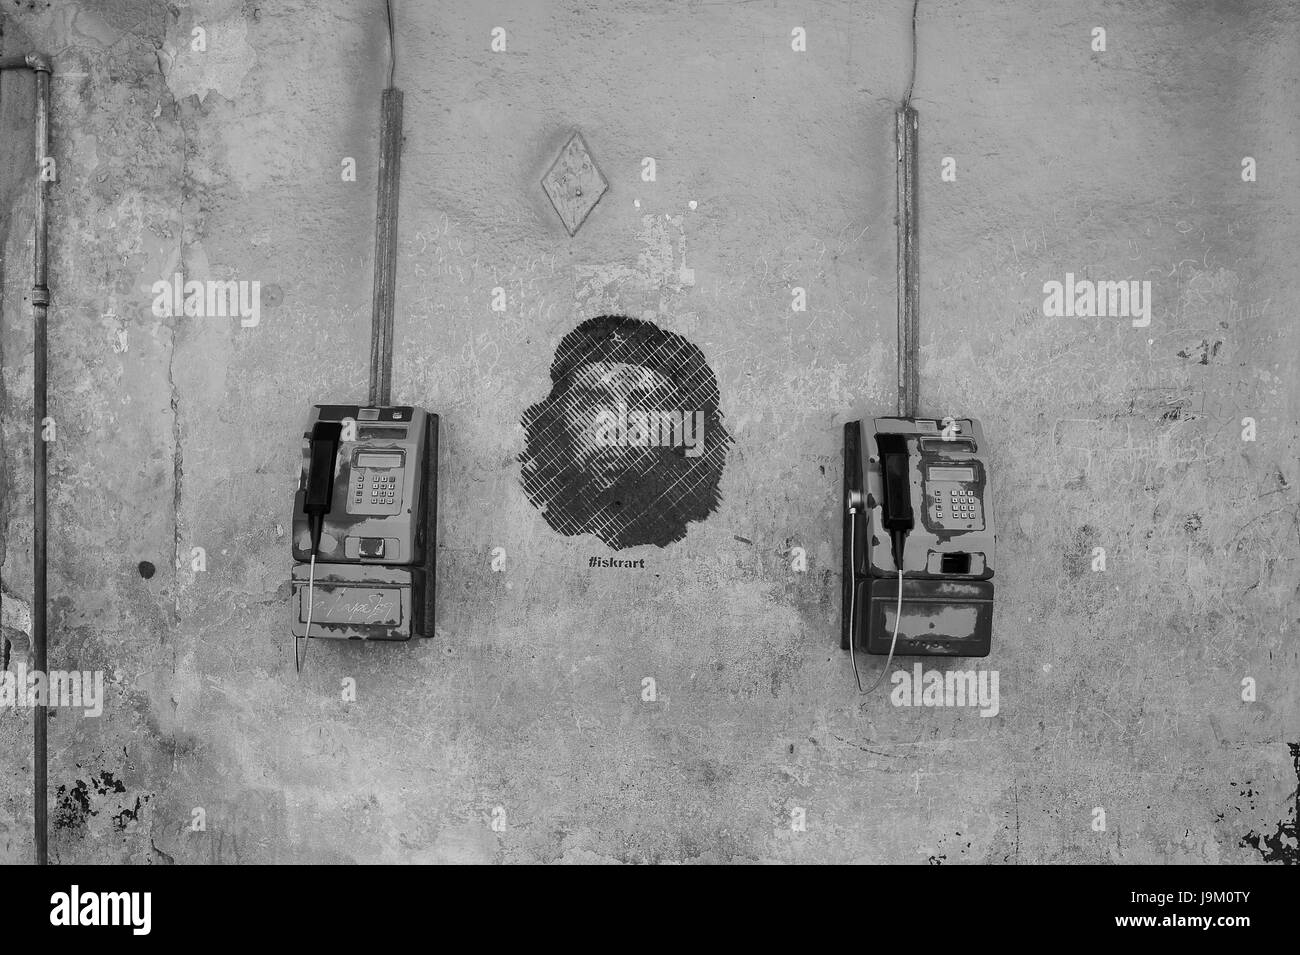 Telefonzellen an Wand mit Ernesto Che Guevara stencil Graffiti malen in Havanna, Kuba Stockfoto